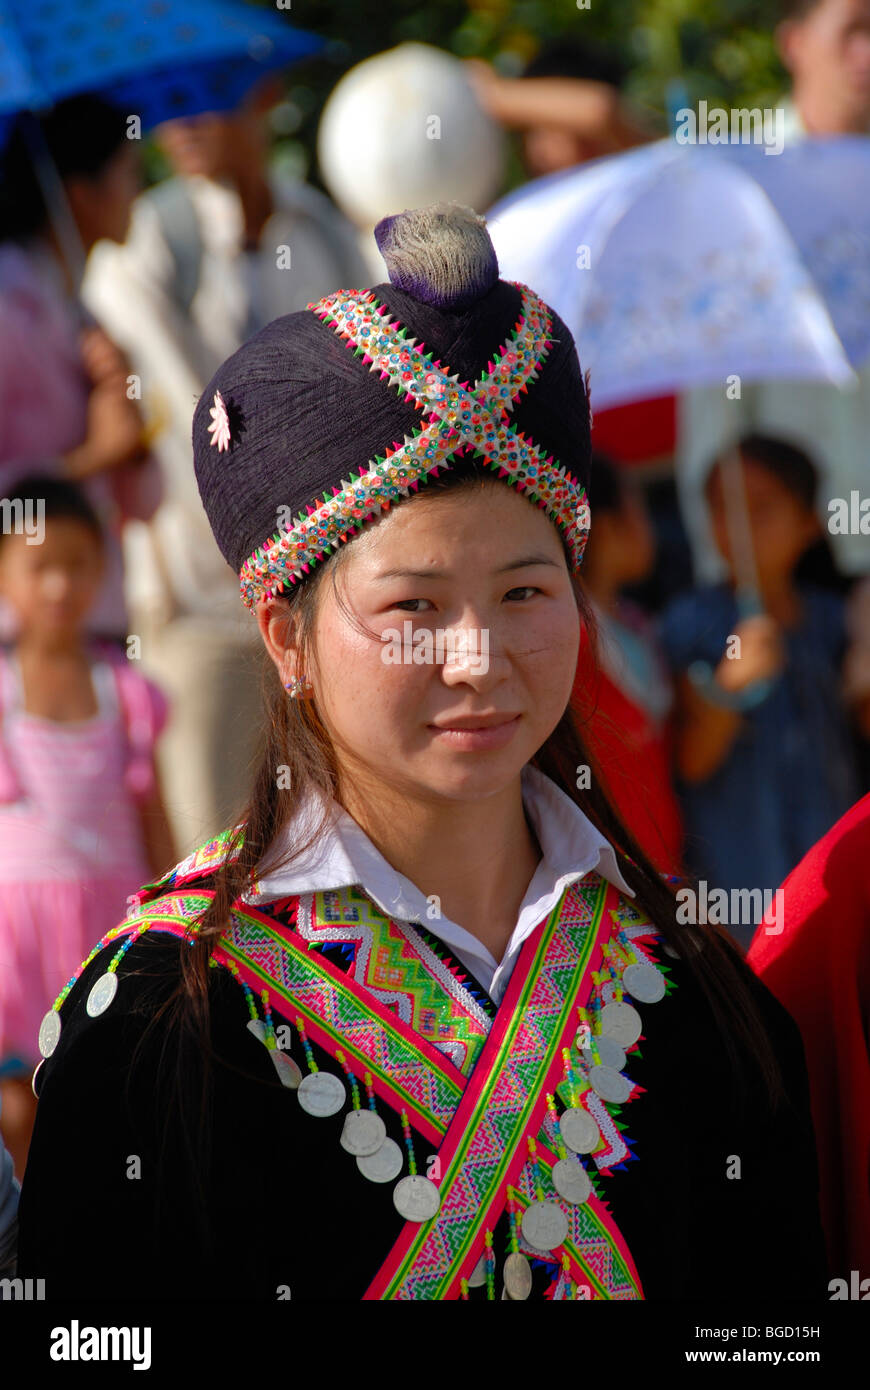 Festival, joven mujer Hmong, retrato, vestidos con ropas tradicionales, sombrerería, Xam Neua, la provincia de Houaphan, Laos, Sudeste Foto de stock